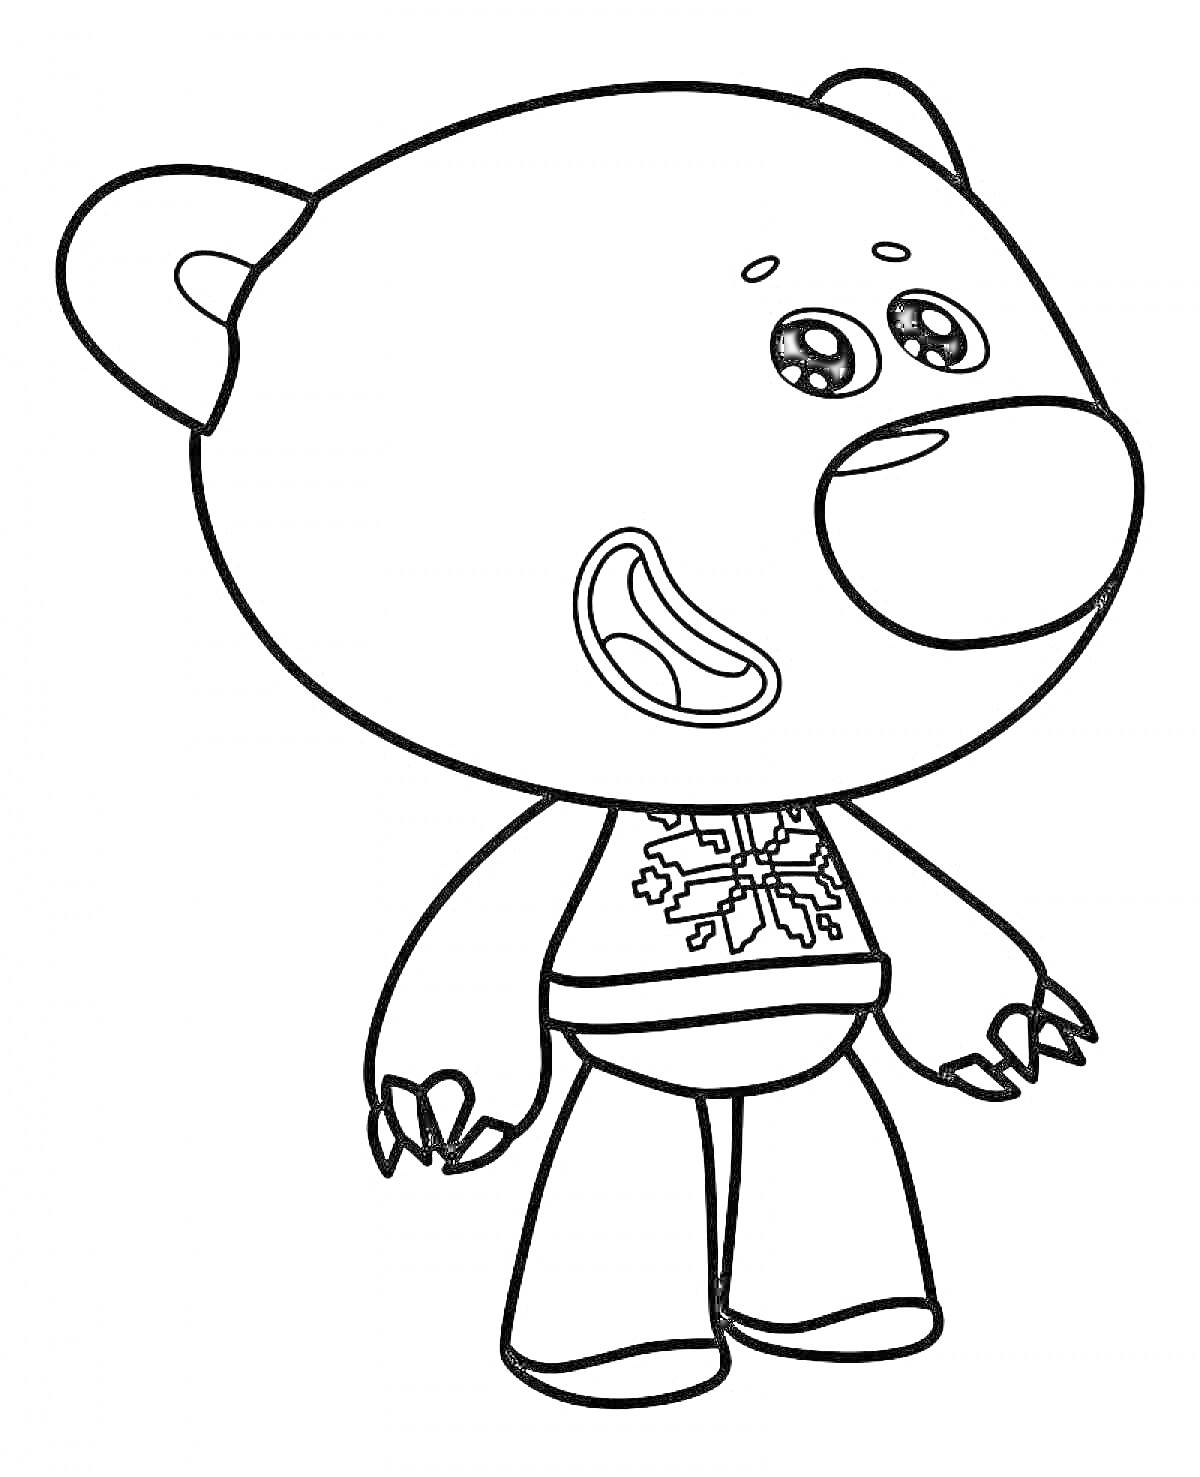 Раскраска медвежонок в свитере с узорами